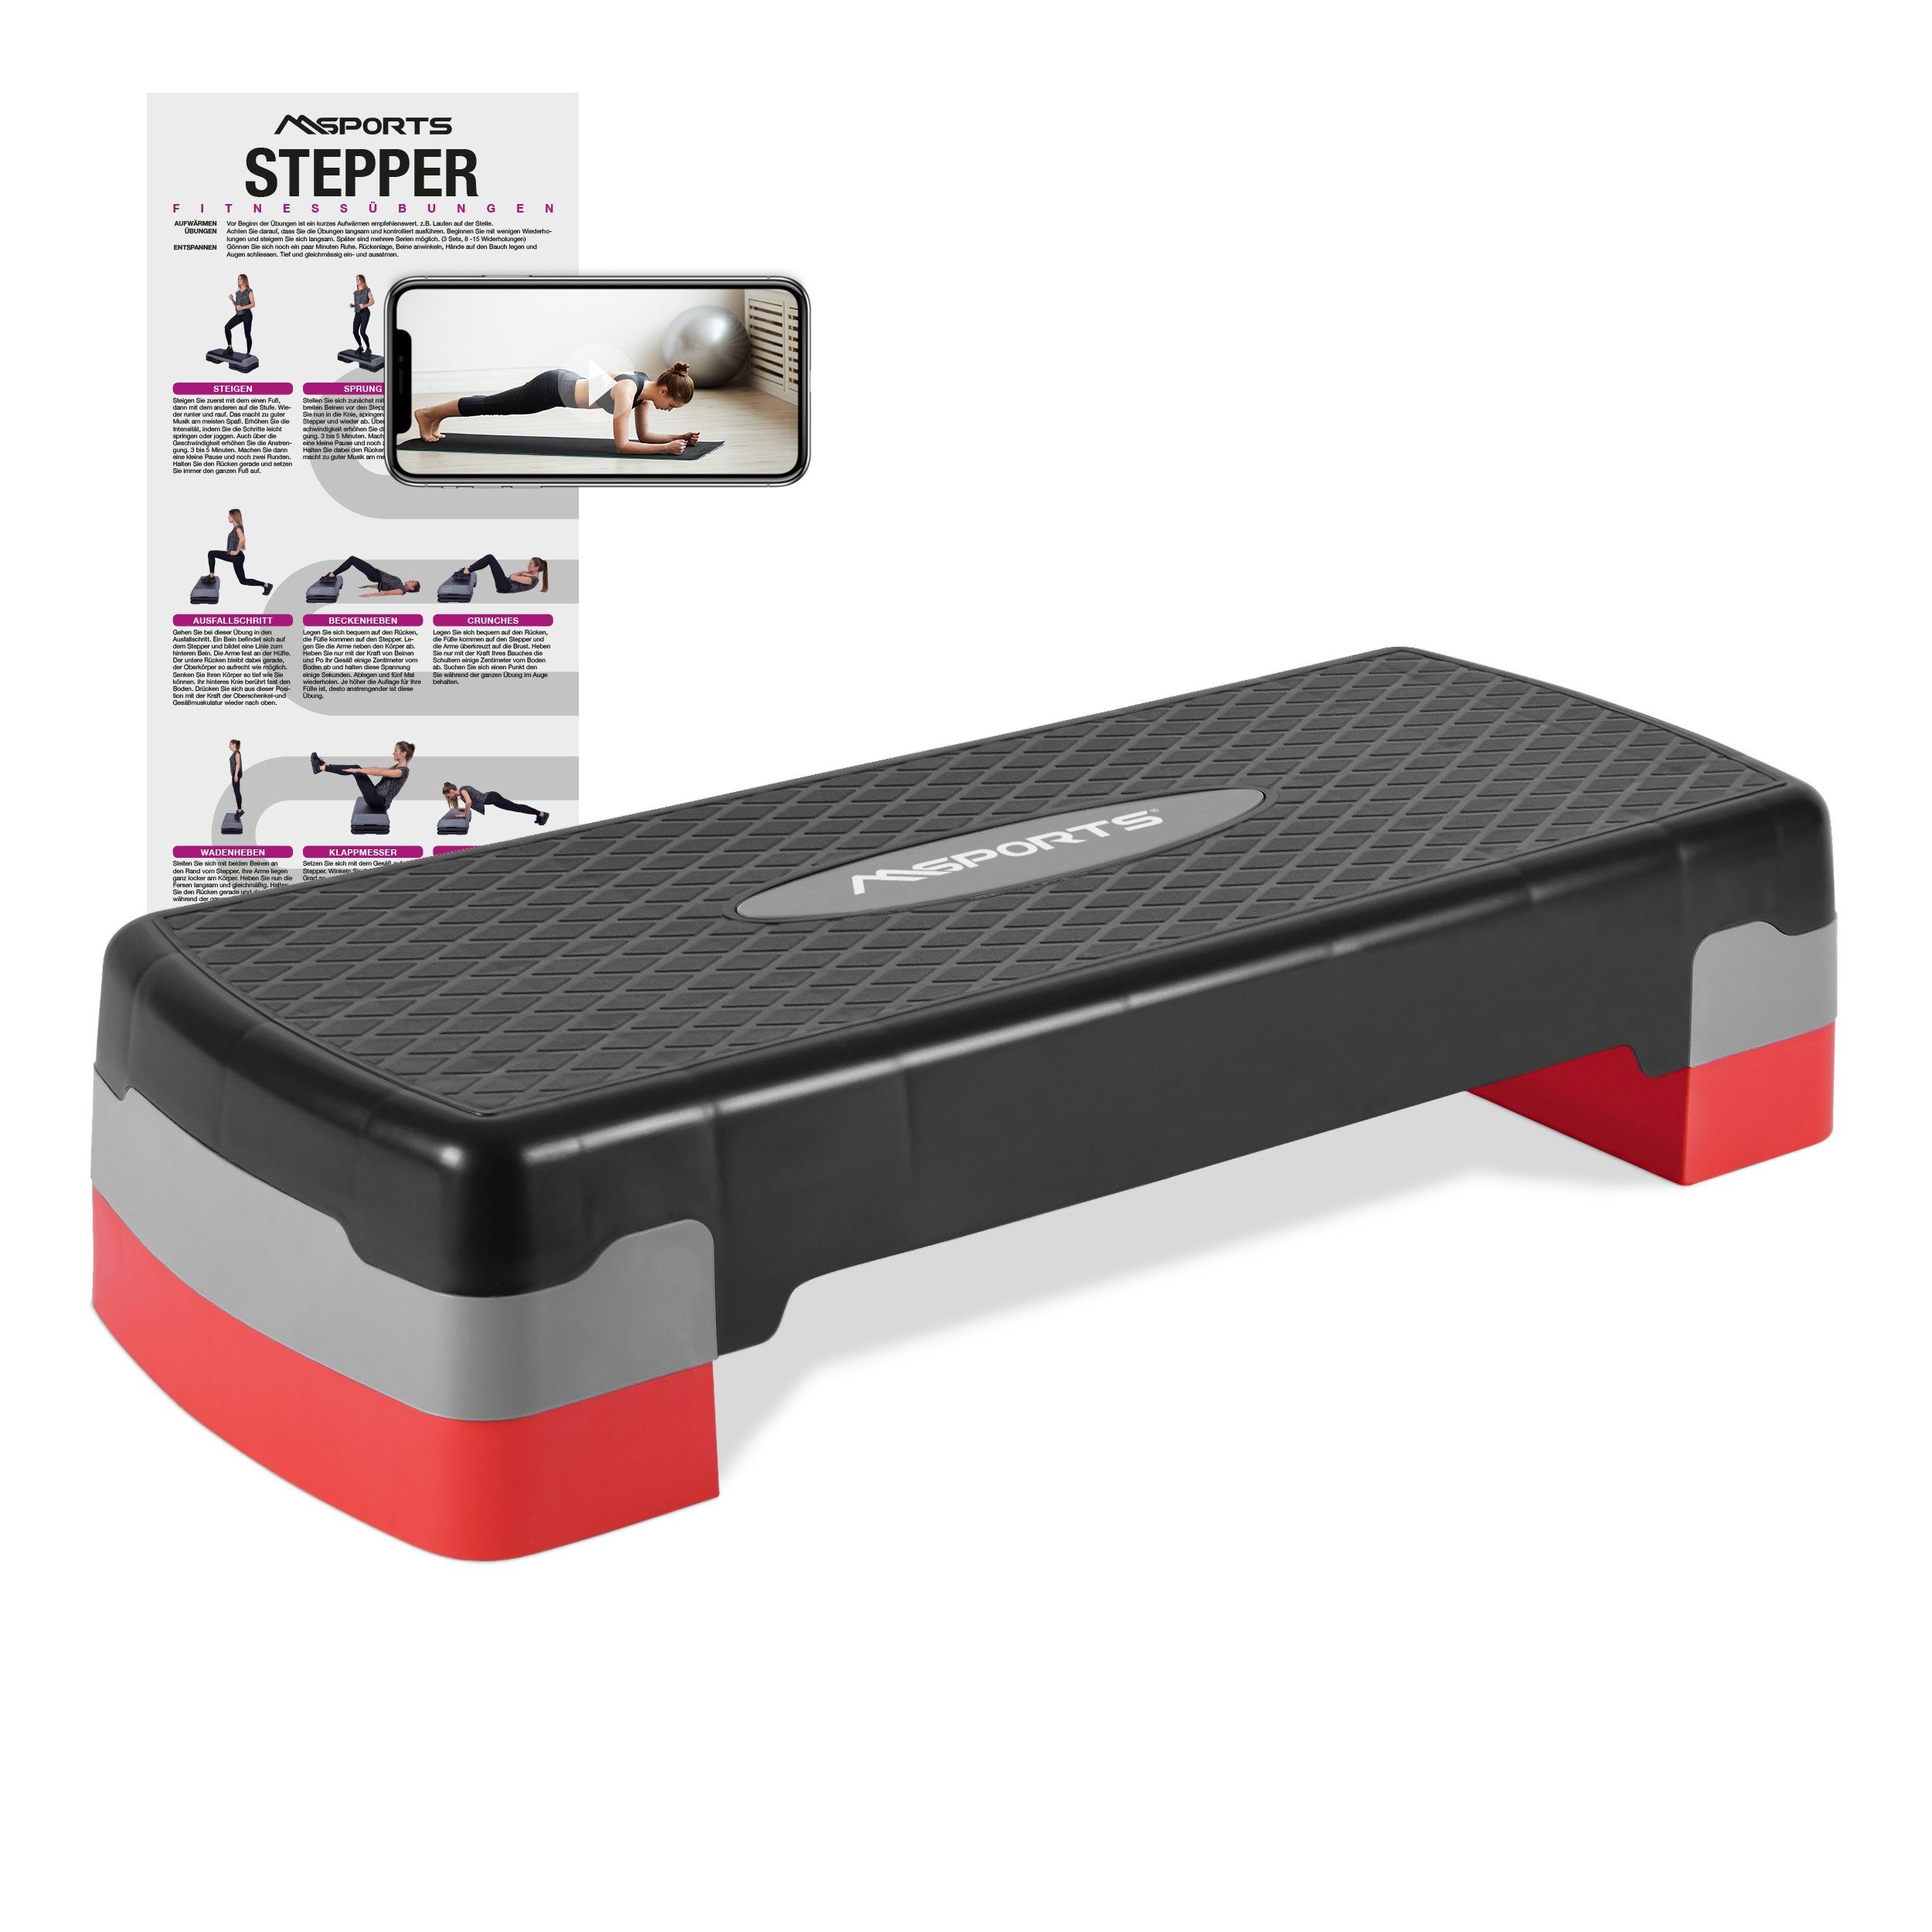 MSports® Stepper Steppbrett Home inkl. Übungsposter 2 - Fach höhenverstellbar schwarz | Stepper